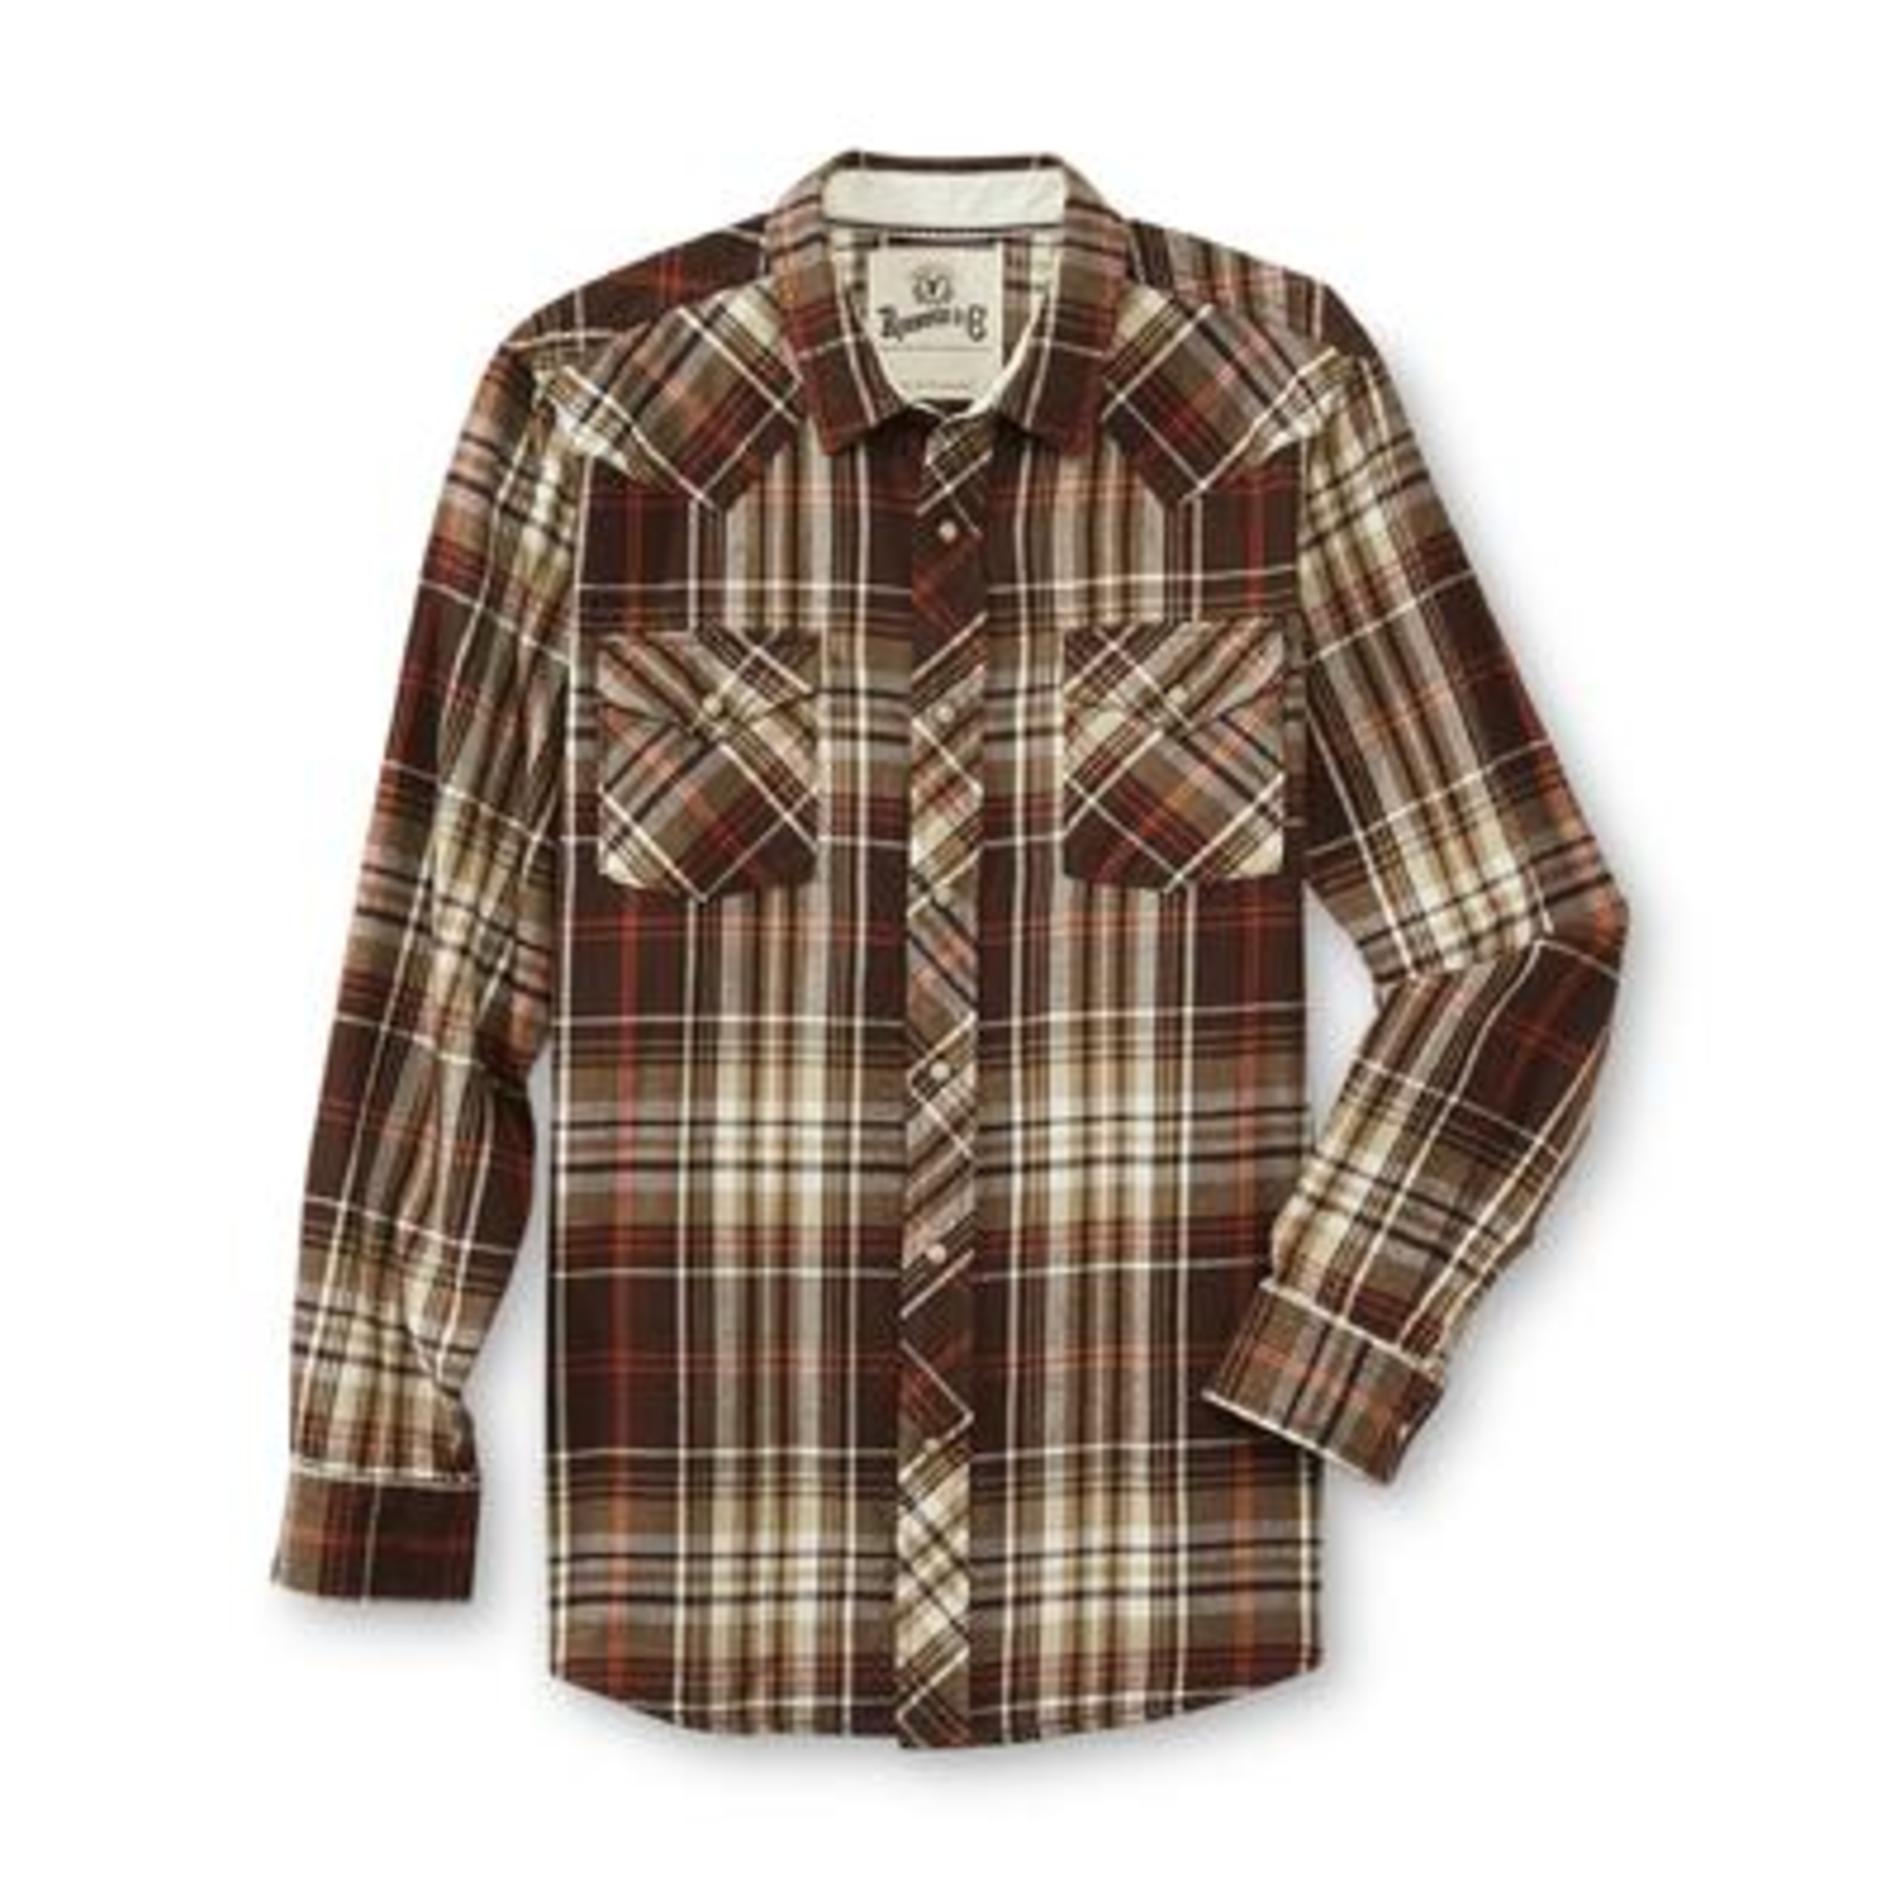 Roebuck & Co. Young Men's Long-Sleeve Woven Shirt - Plaid